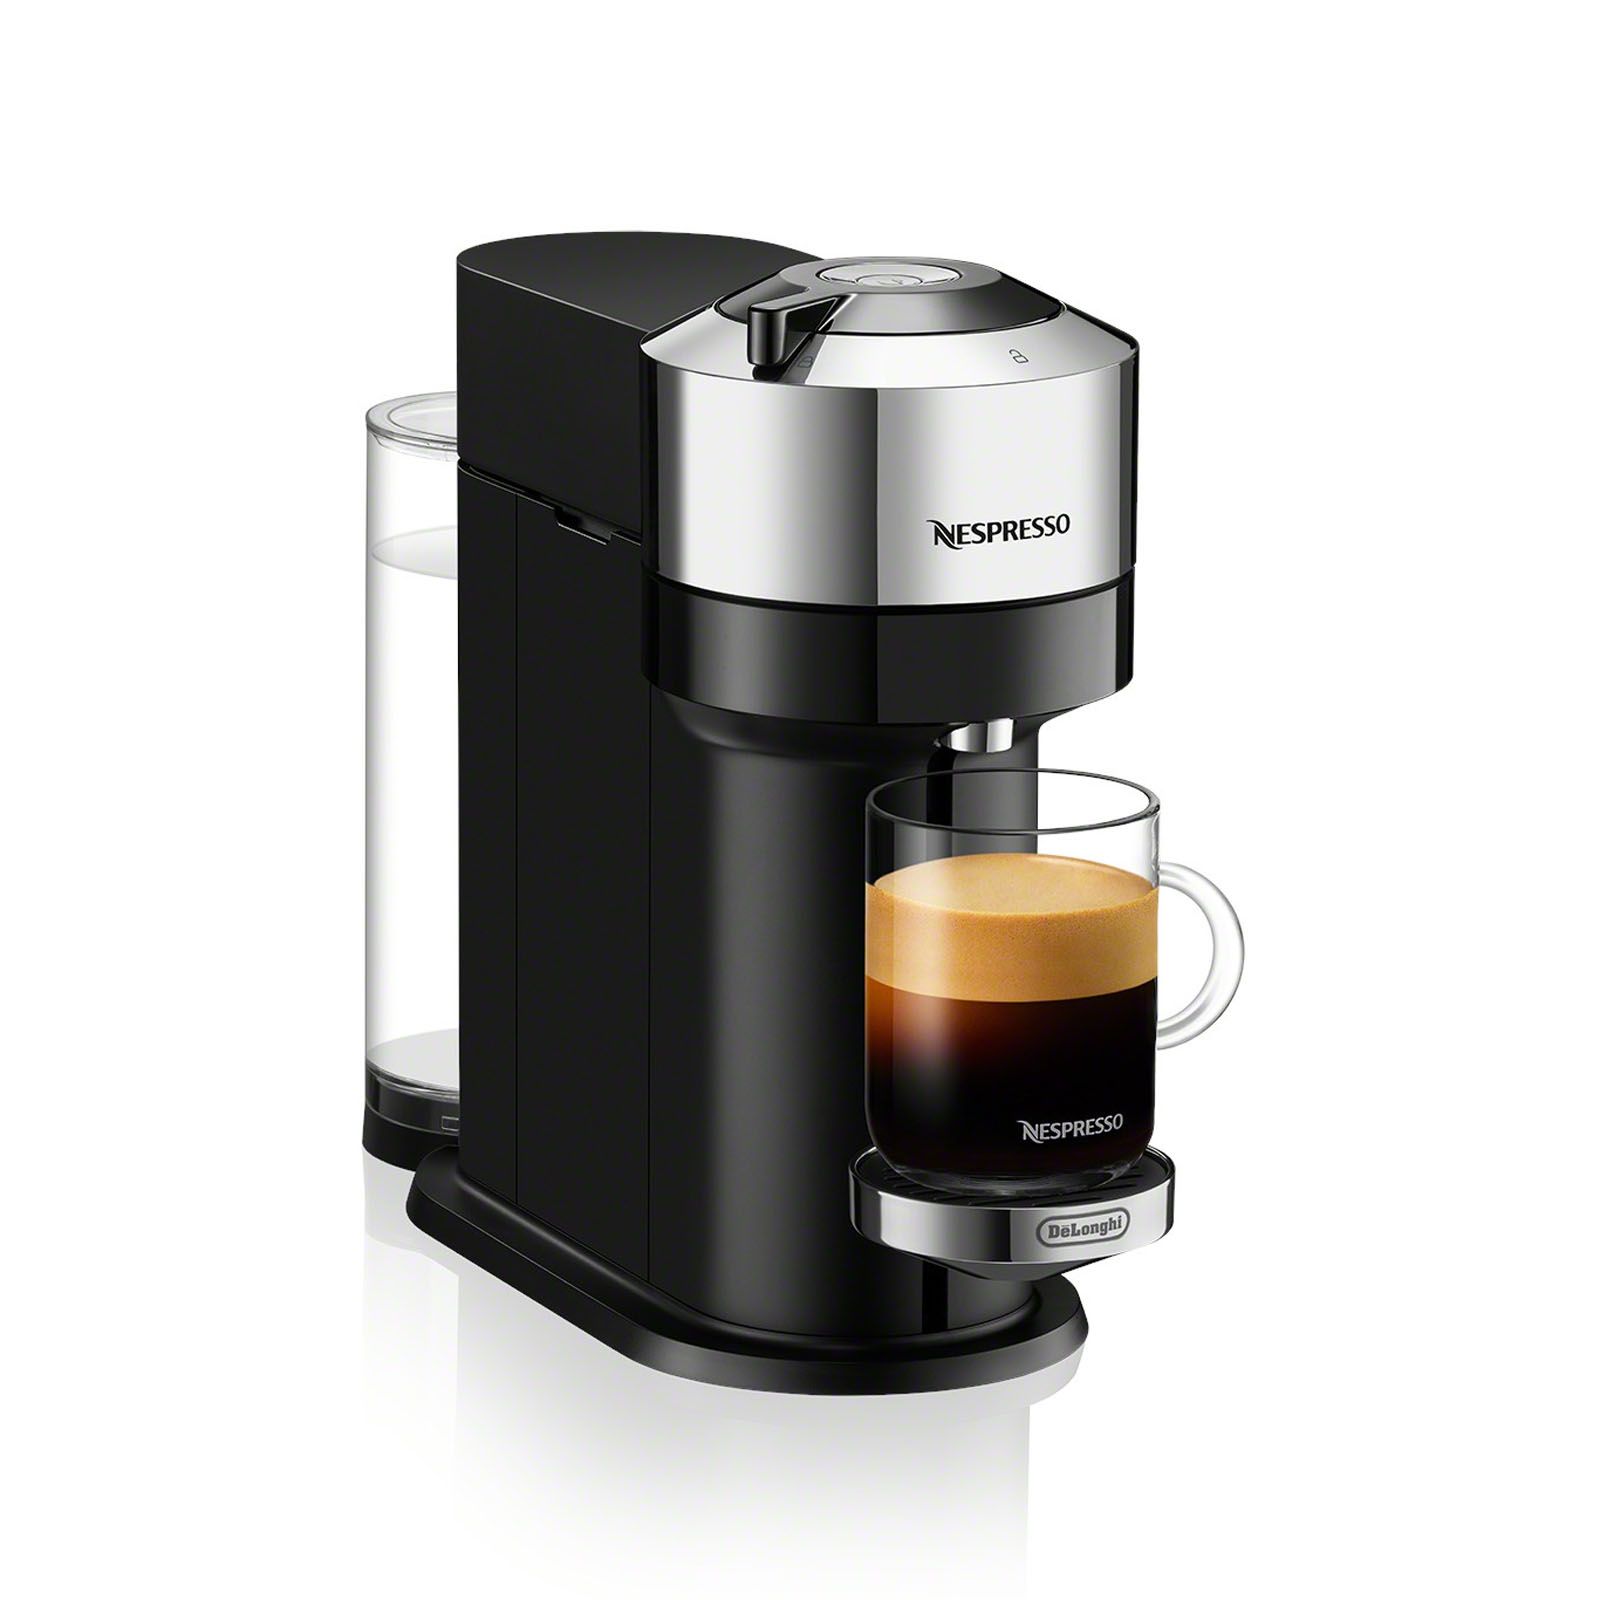 Nespresso Gourmet Coffee Machine